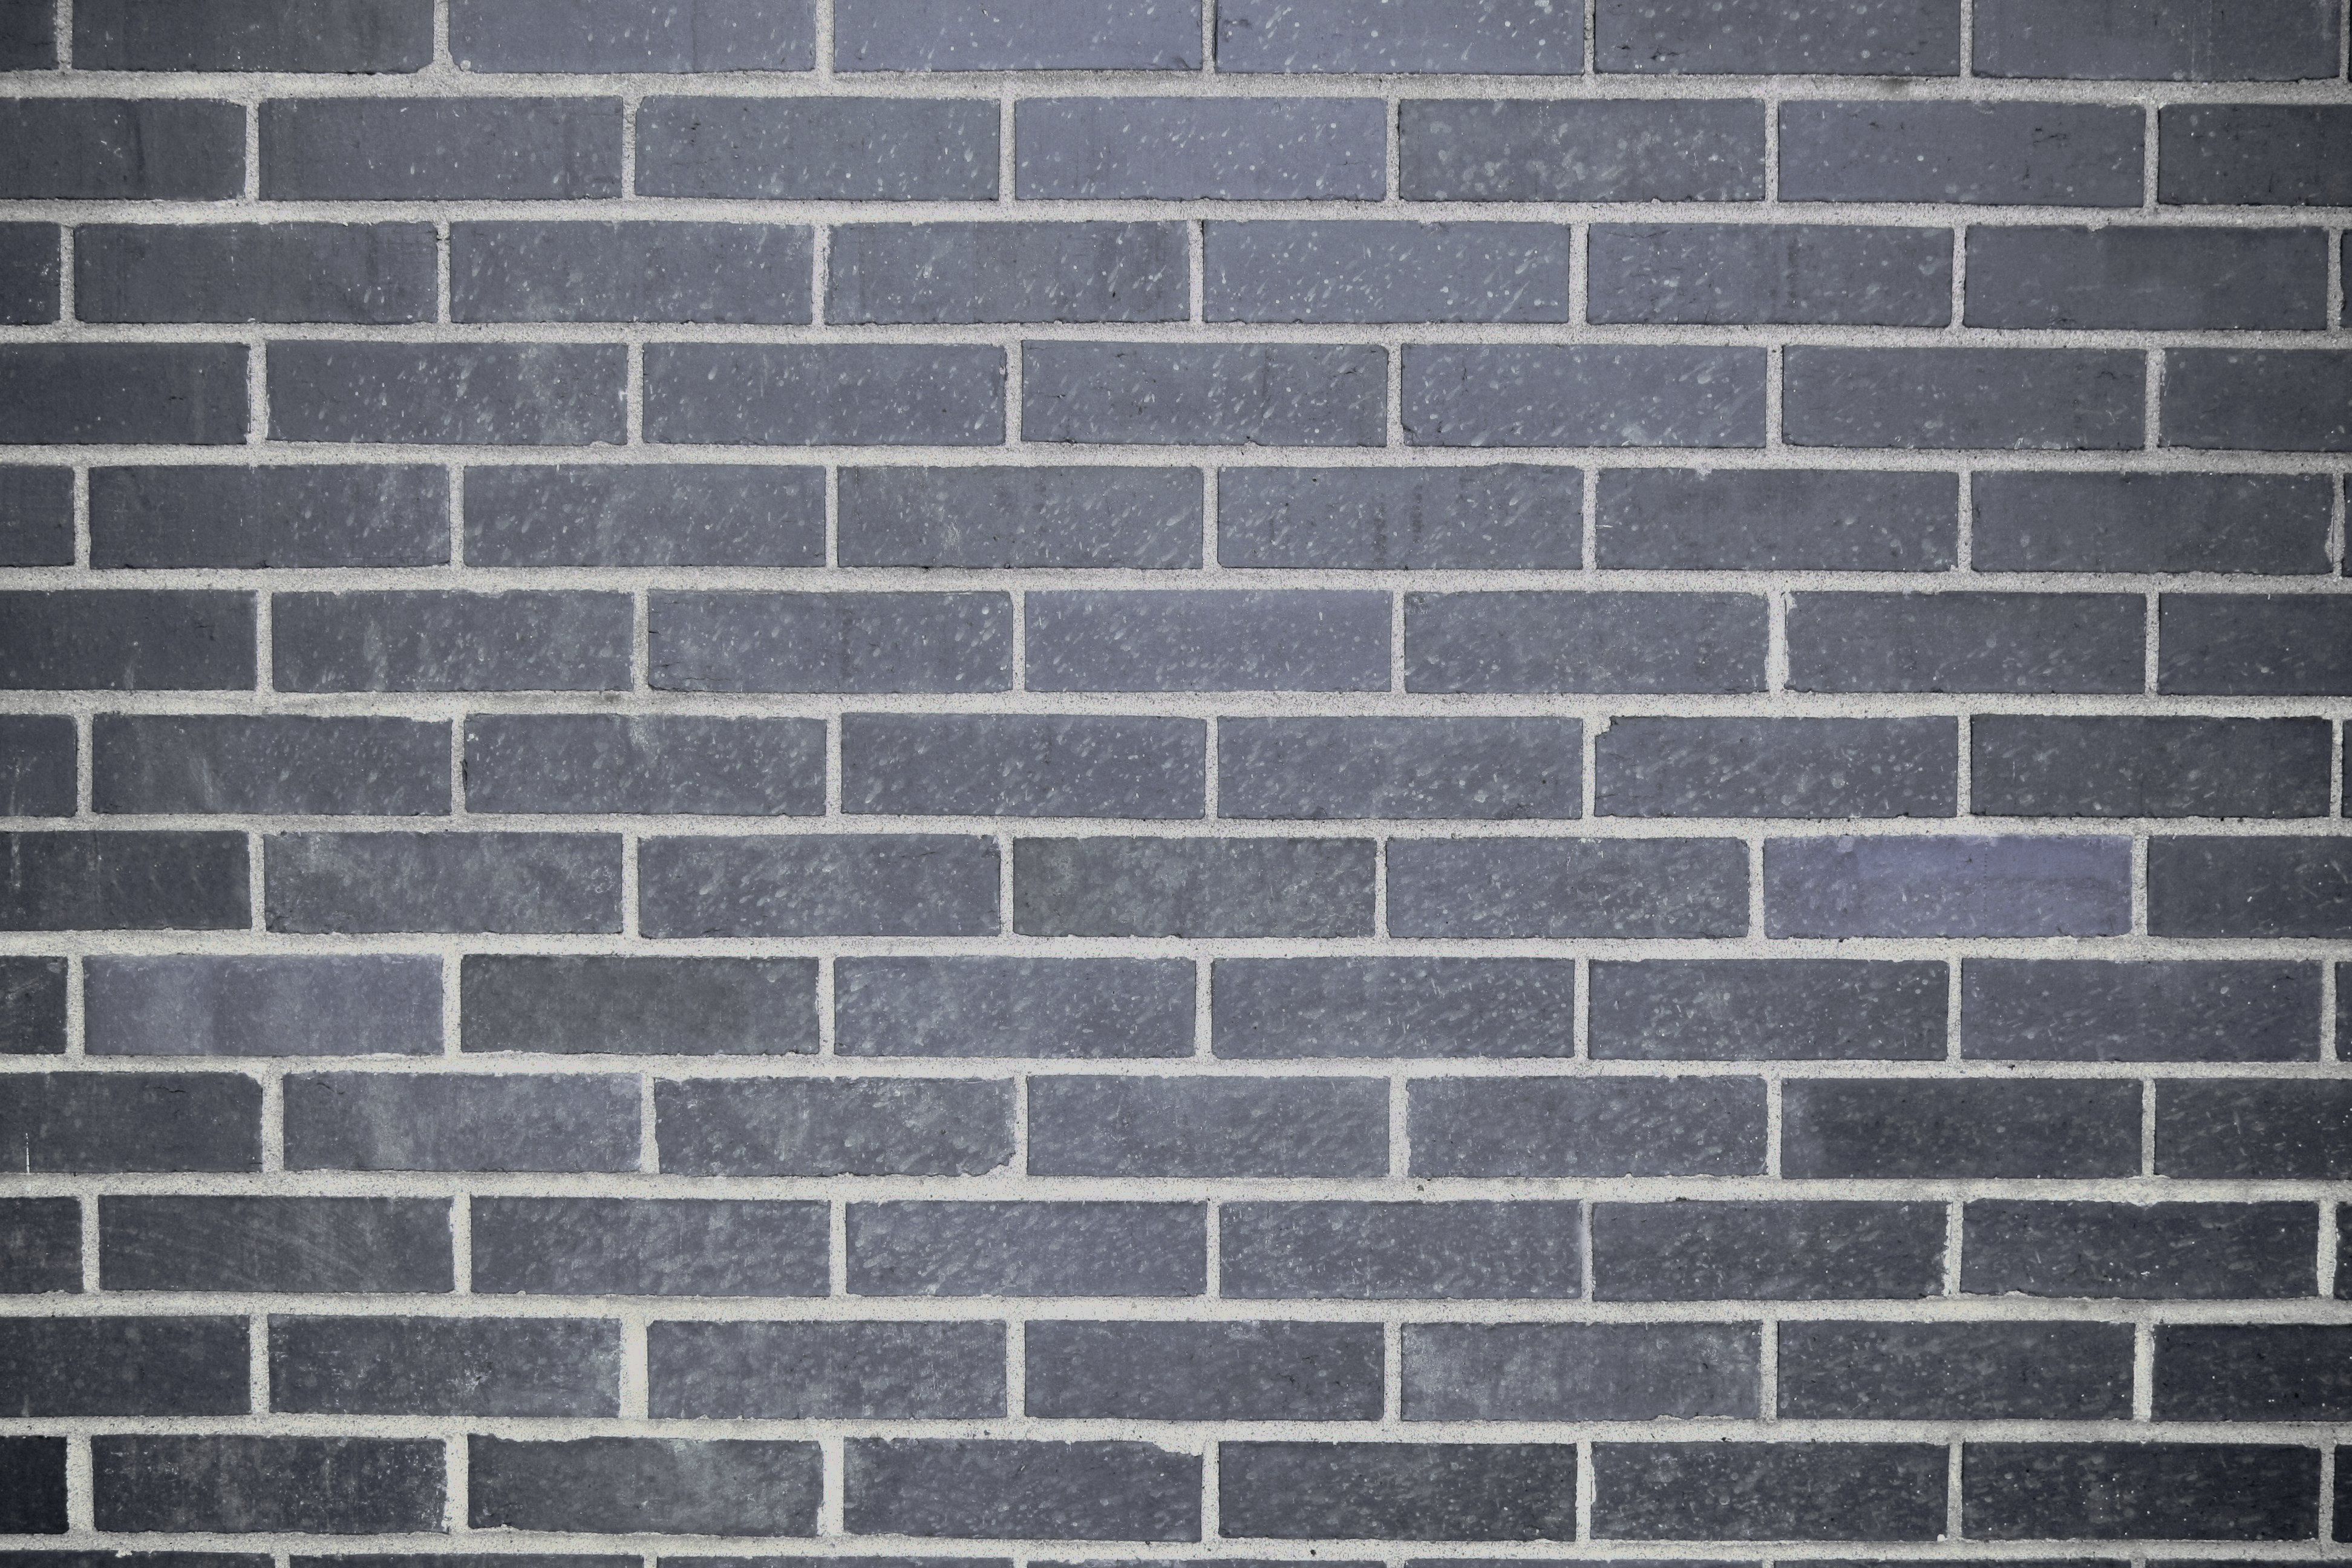 Gray Brick Wall Texture Picture. Free Photograph. Photo Public Domain